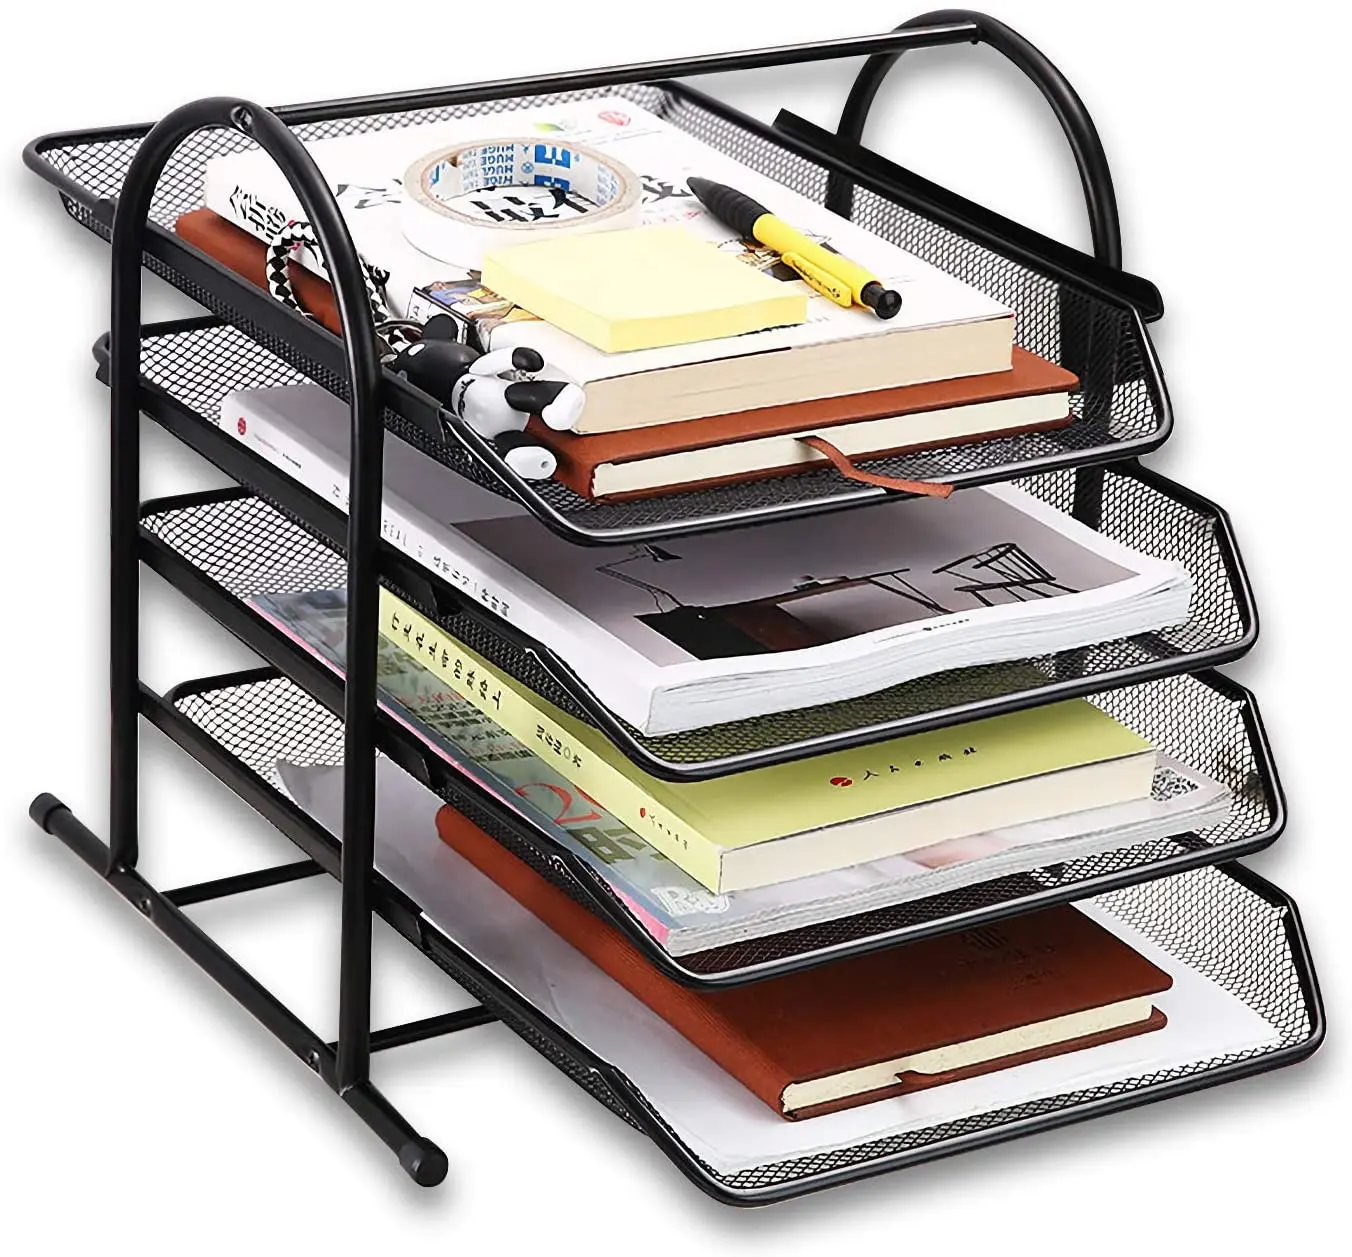 

Carpetas Separador Shelf Simple Stackable Expanding Folder Stationery 4 Tier Office Desk Document File Tray Organizer